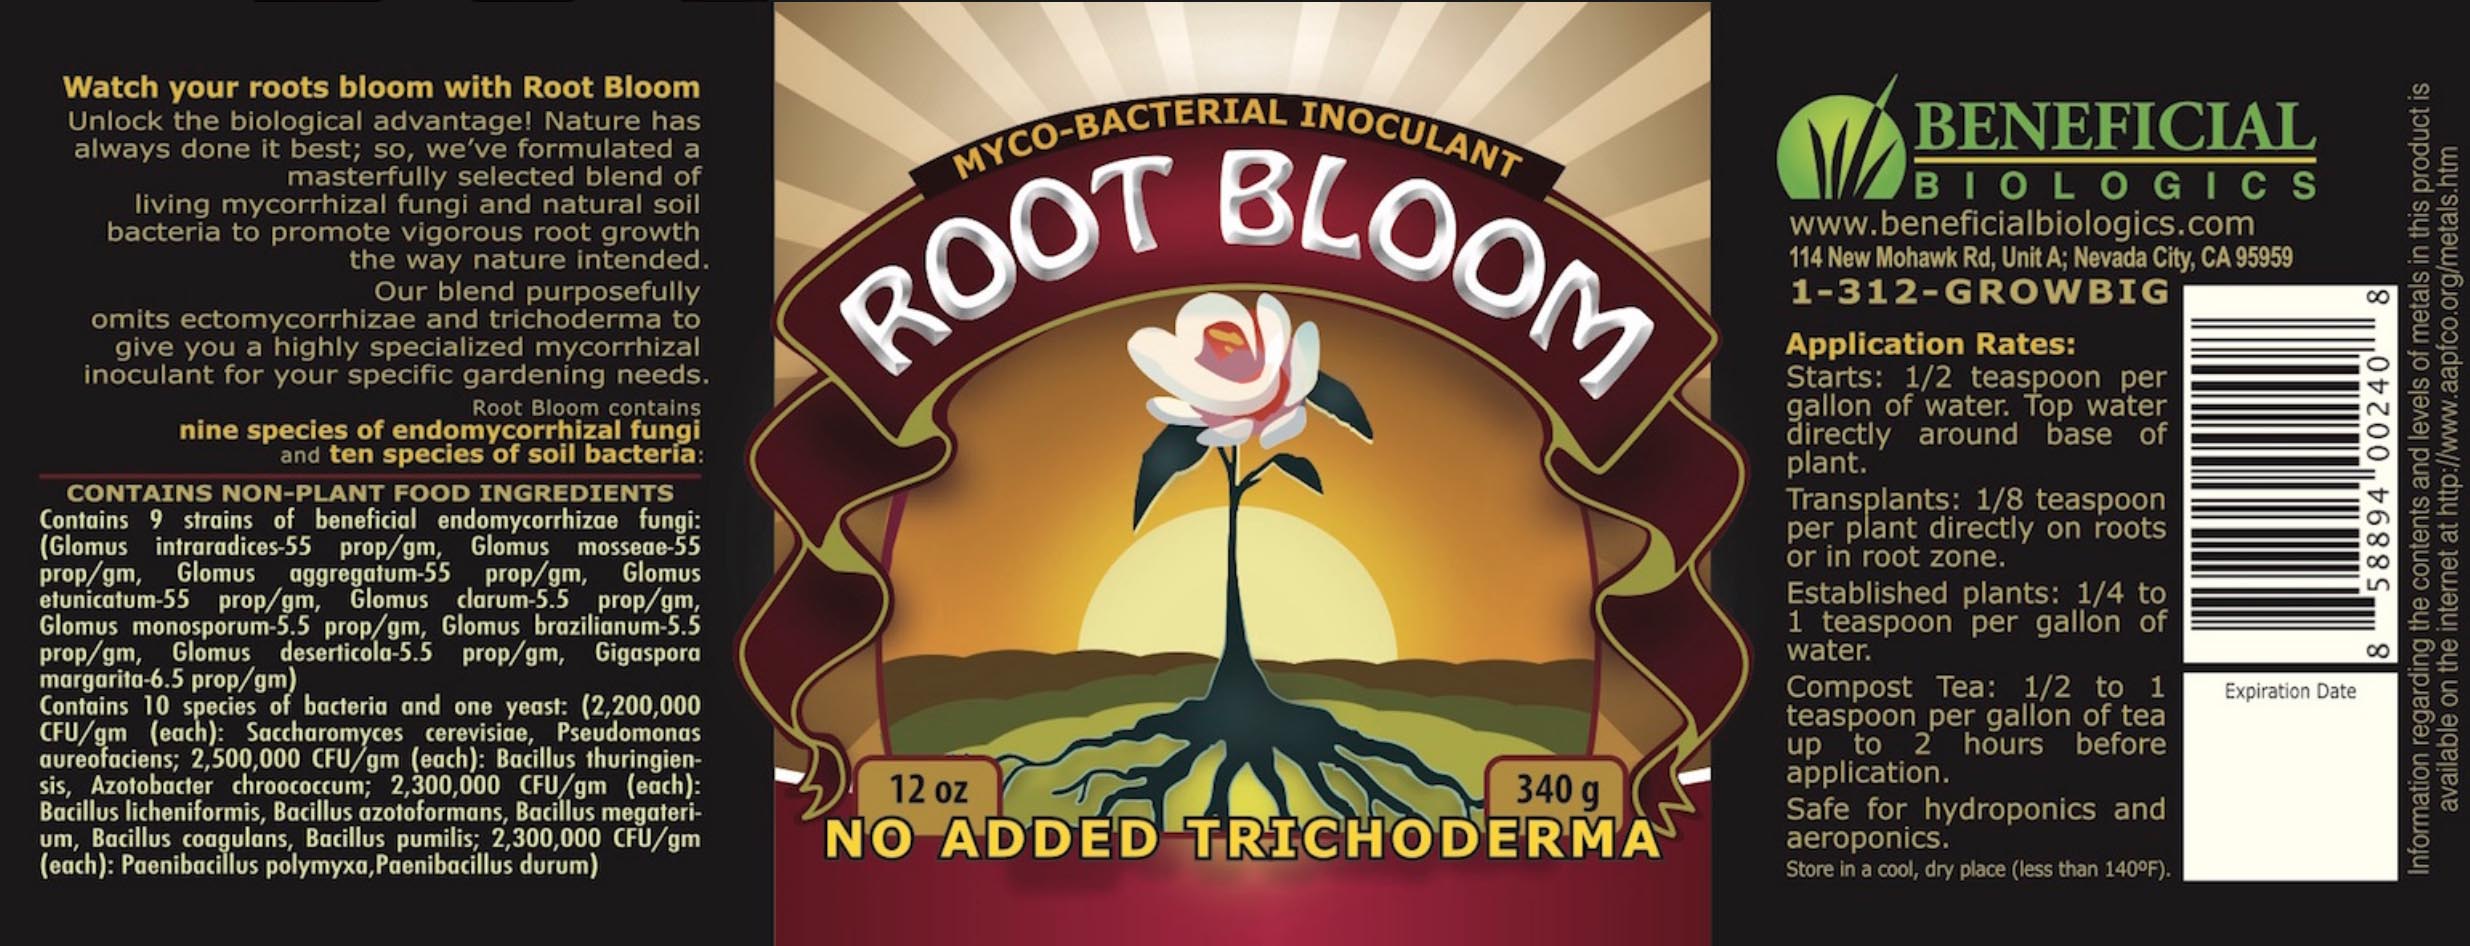 root bloom